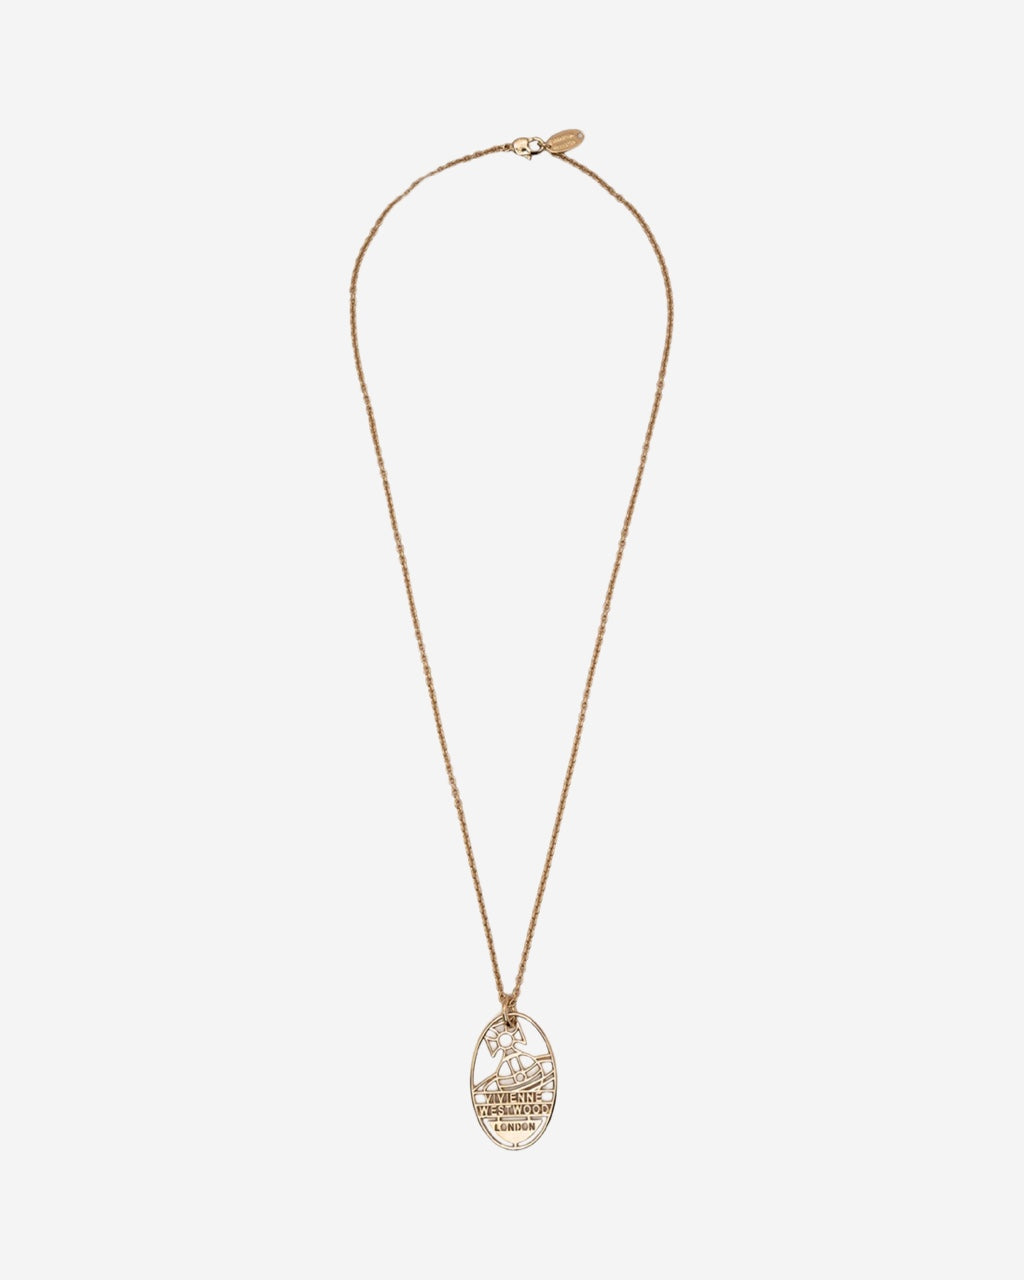 Vivienne Westwood Orb Necklace